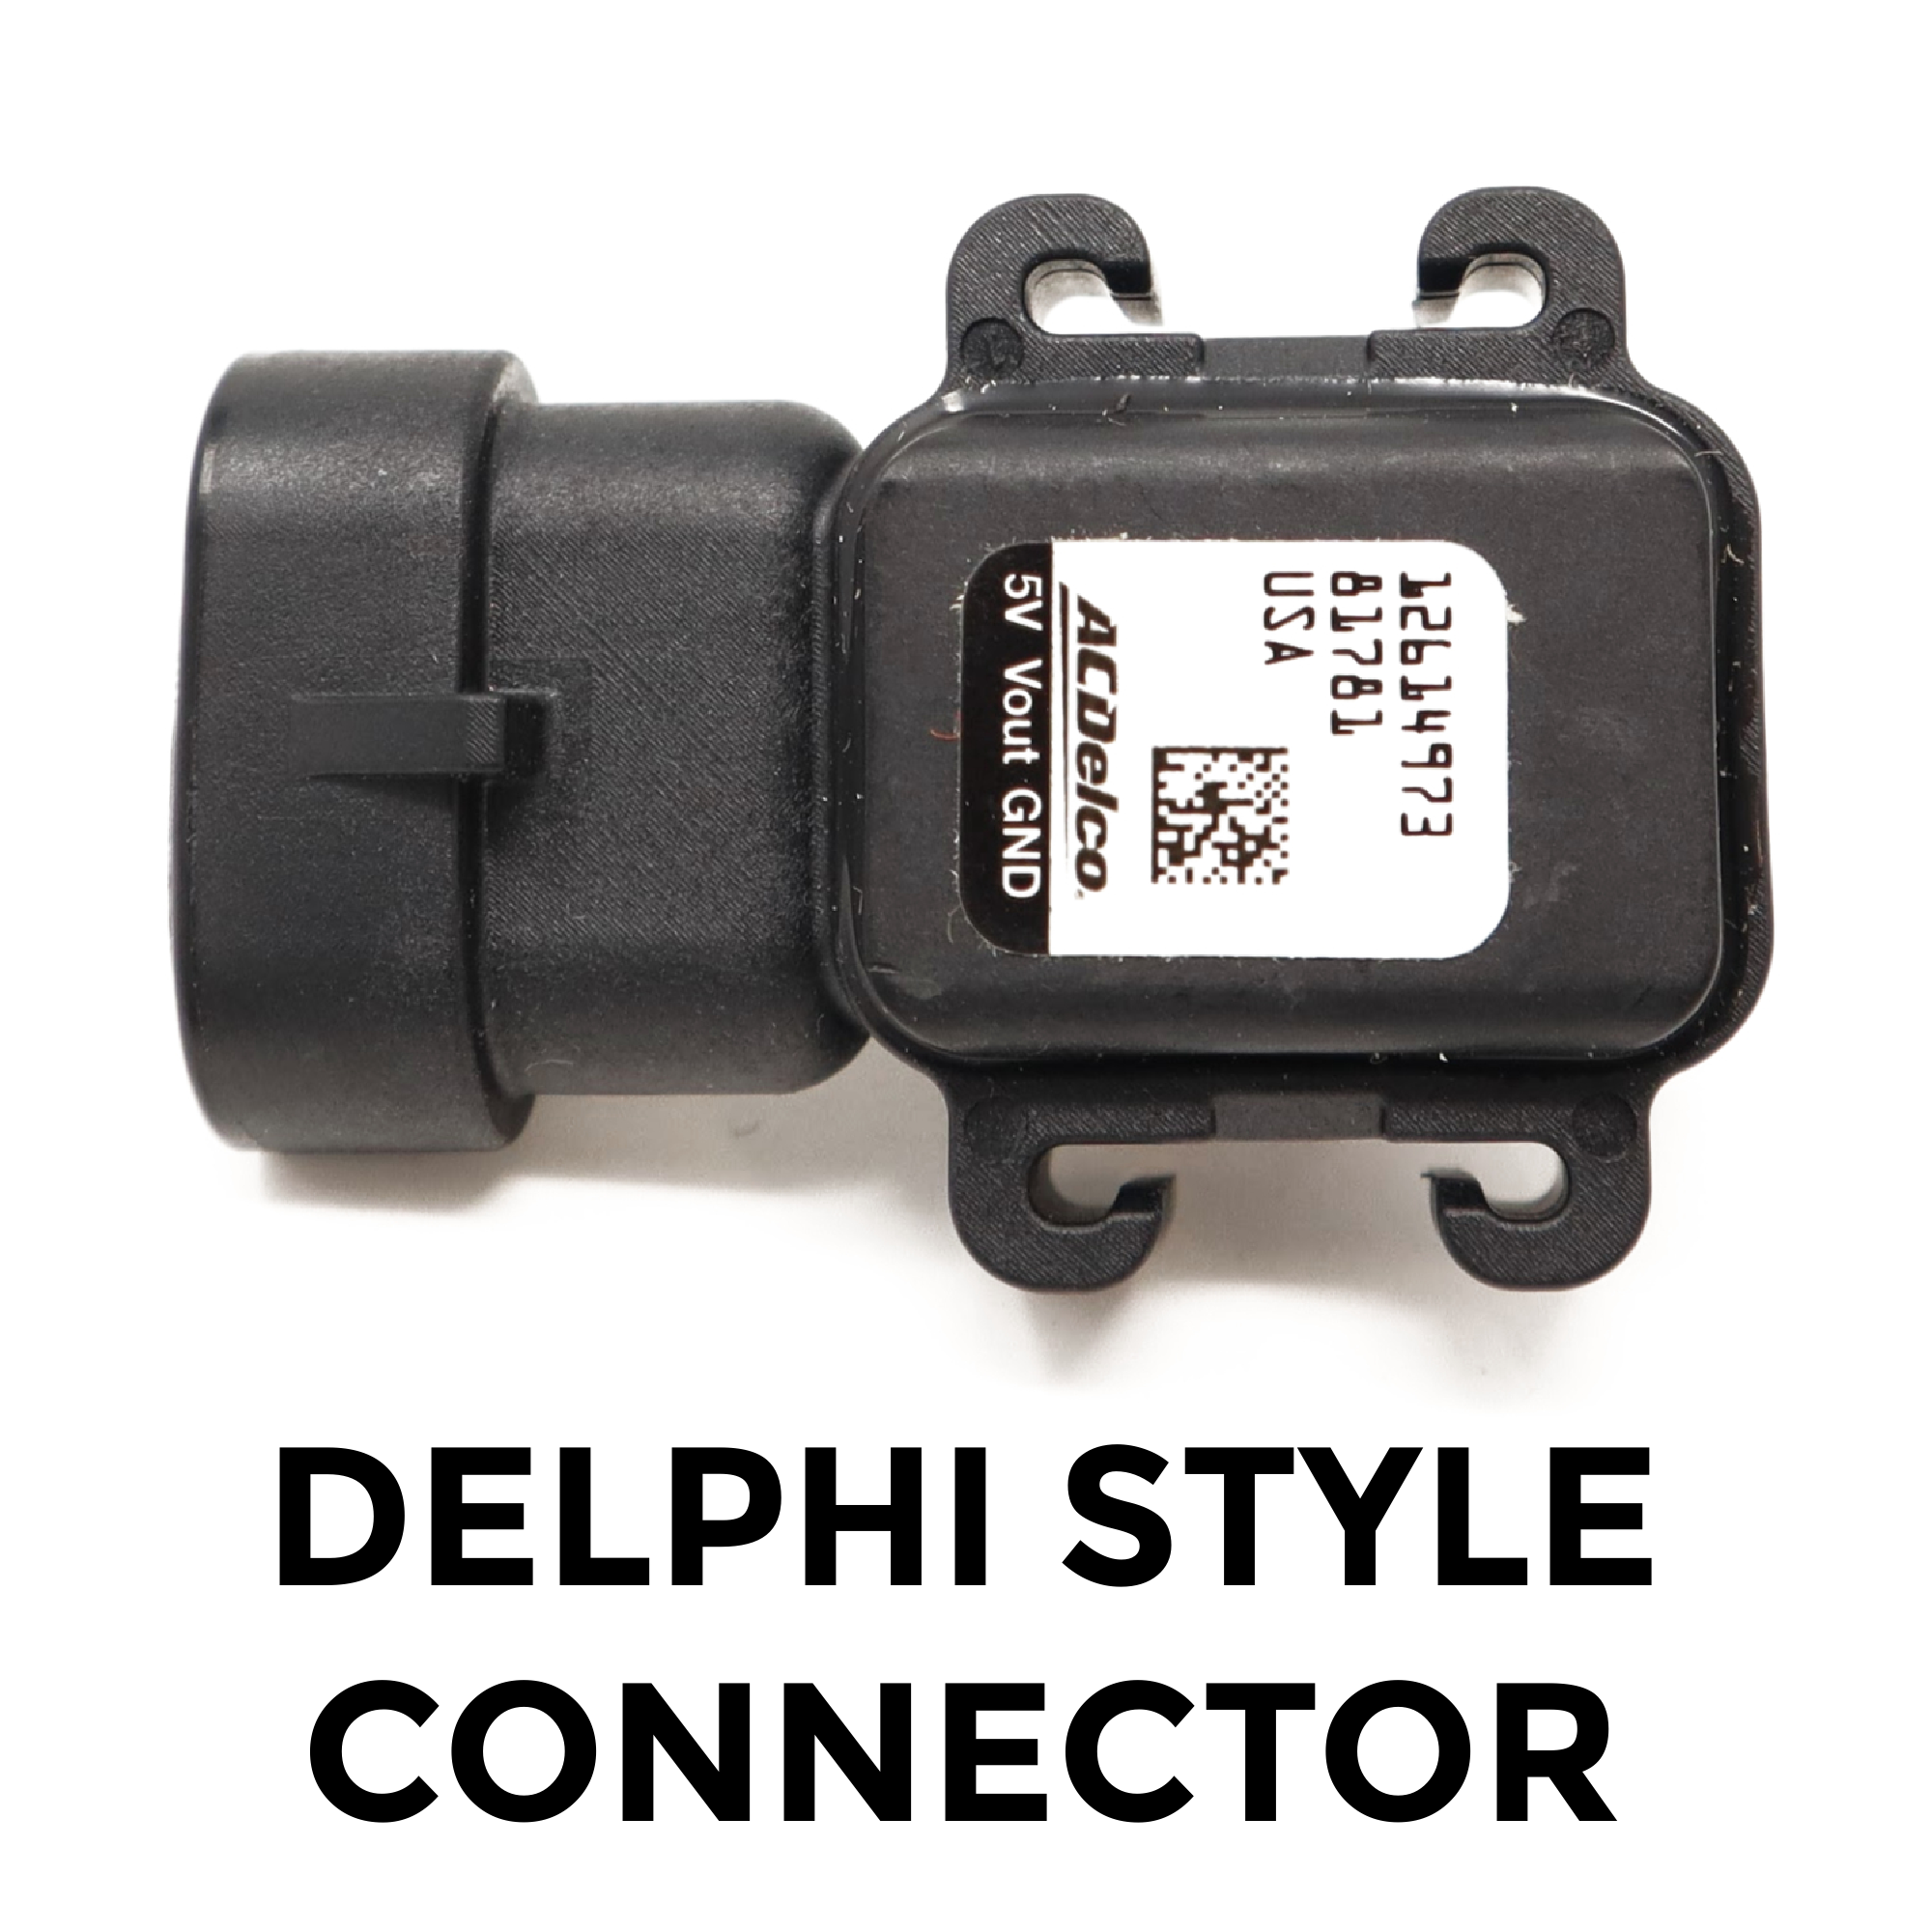 Delphi Style Connector $0.00